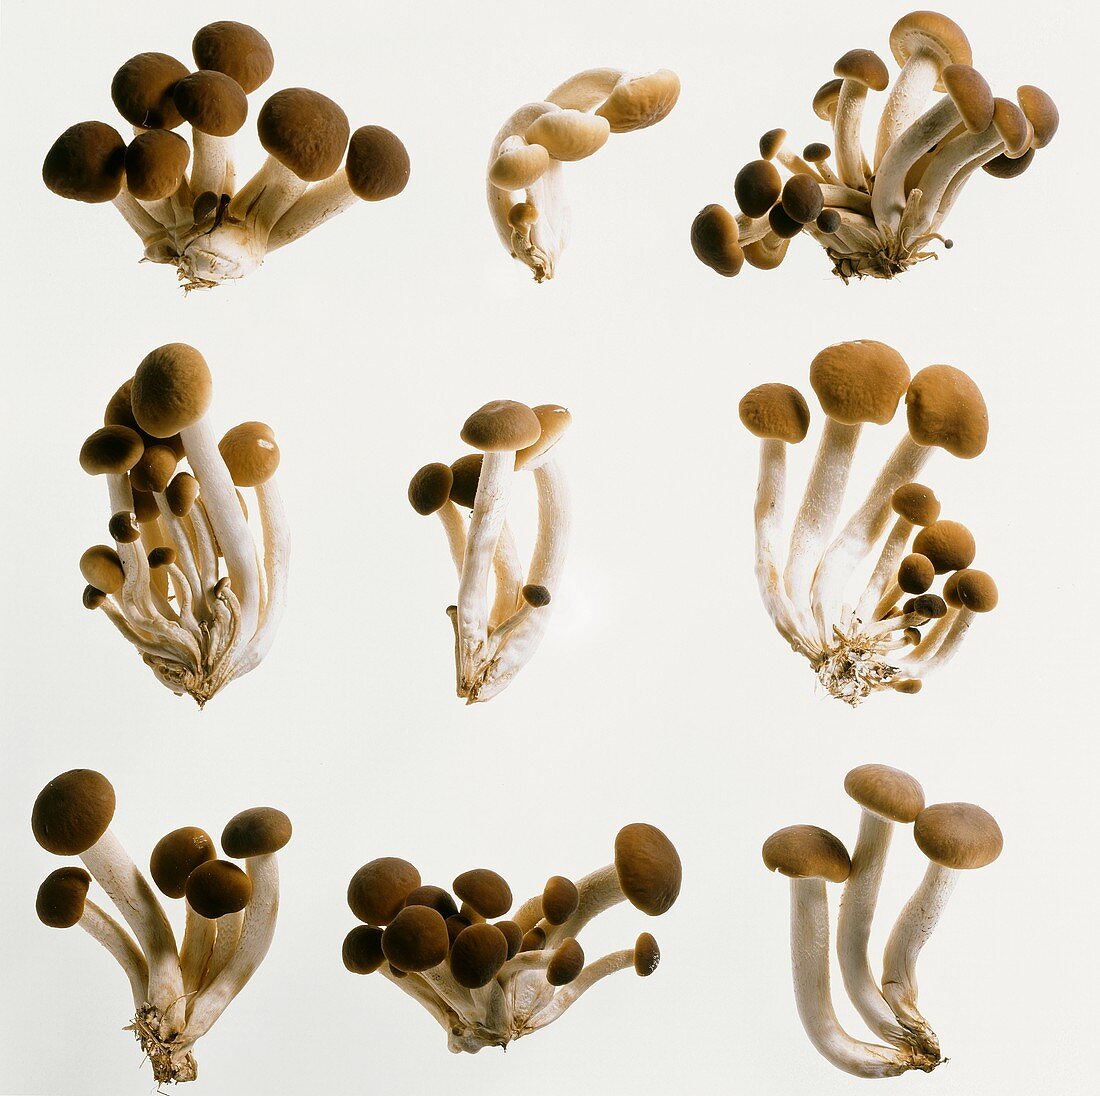 Honey agaric mushrooms on white background